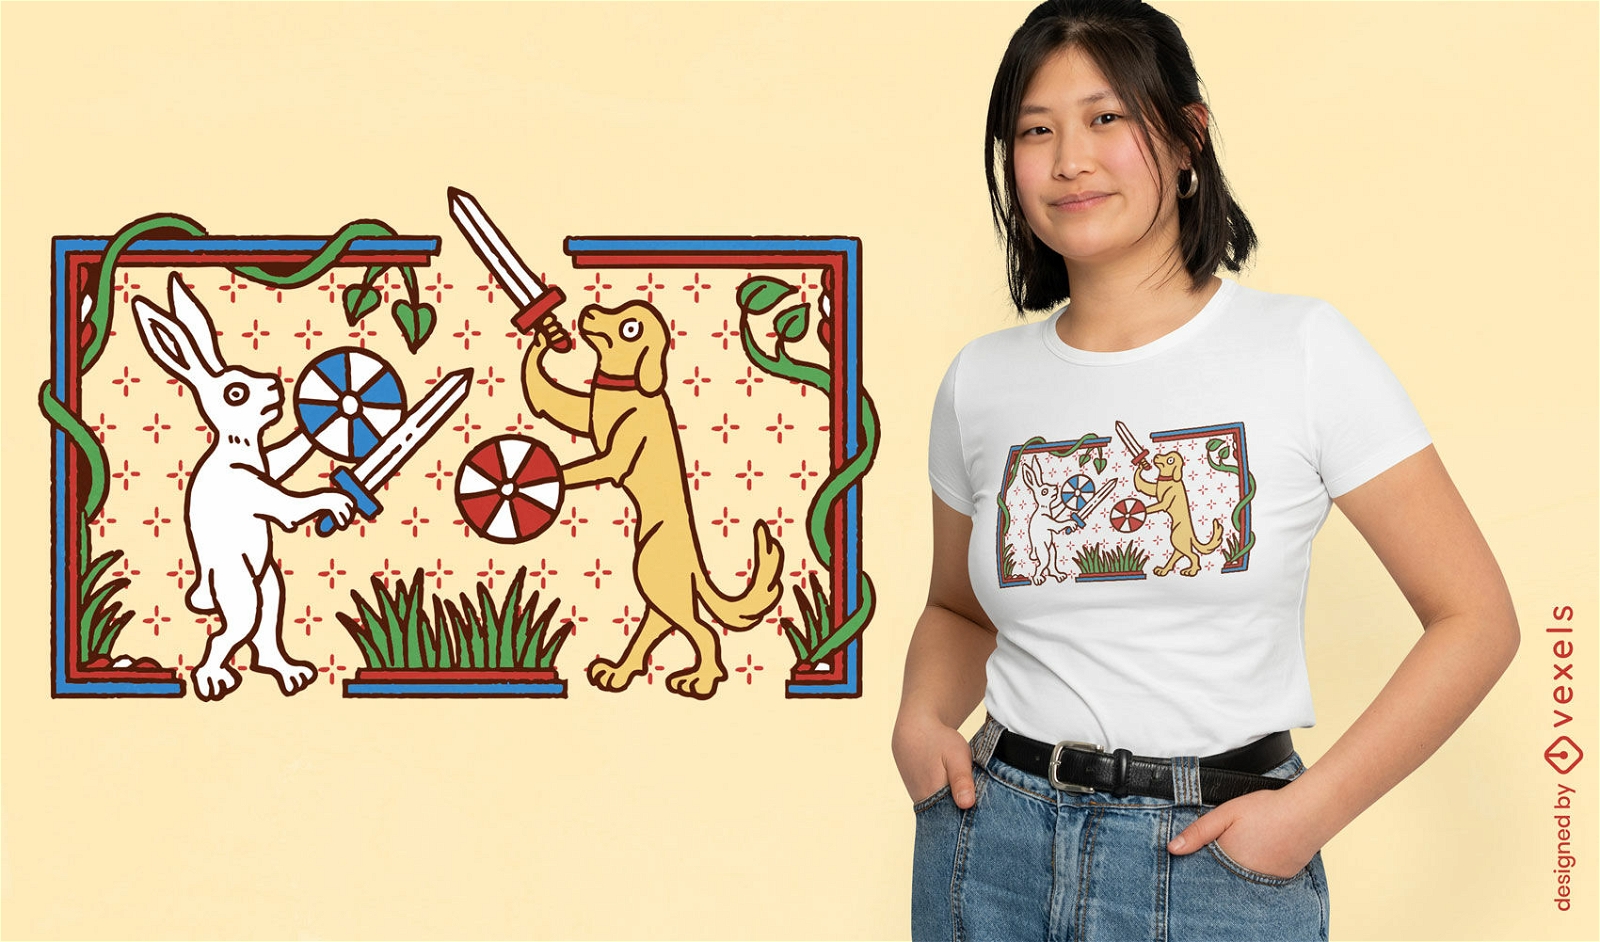 Rabbit and dog sword fighting t-shirt design